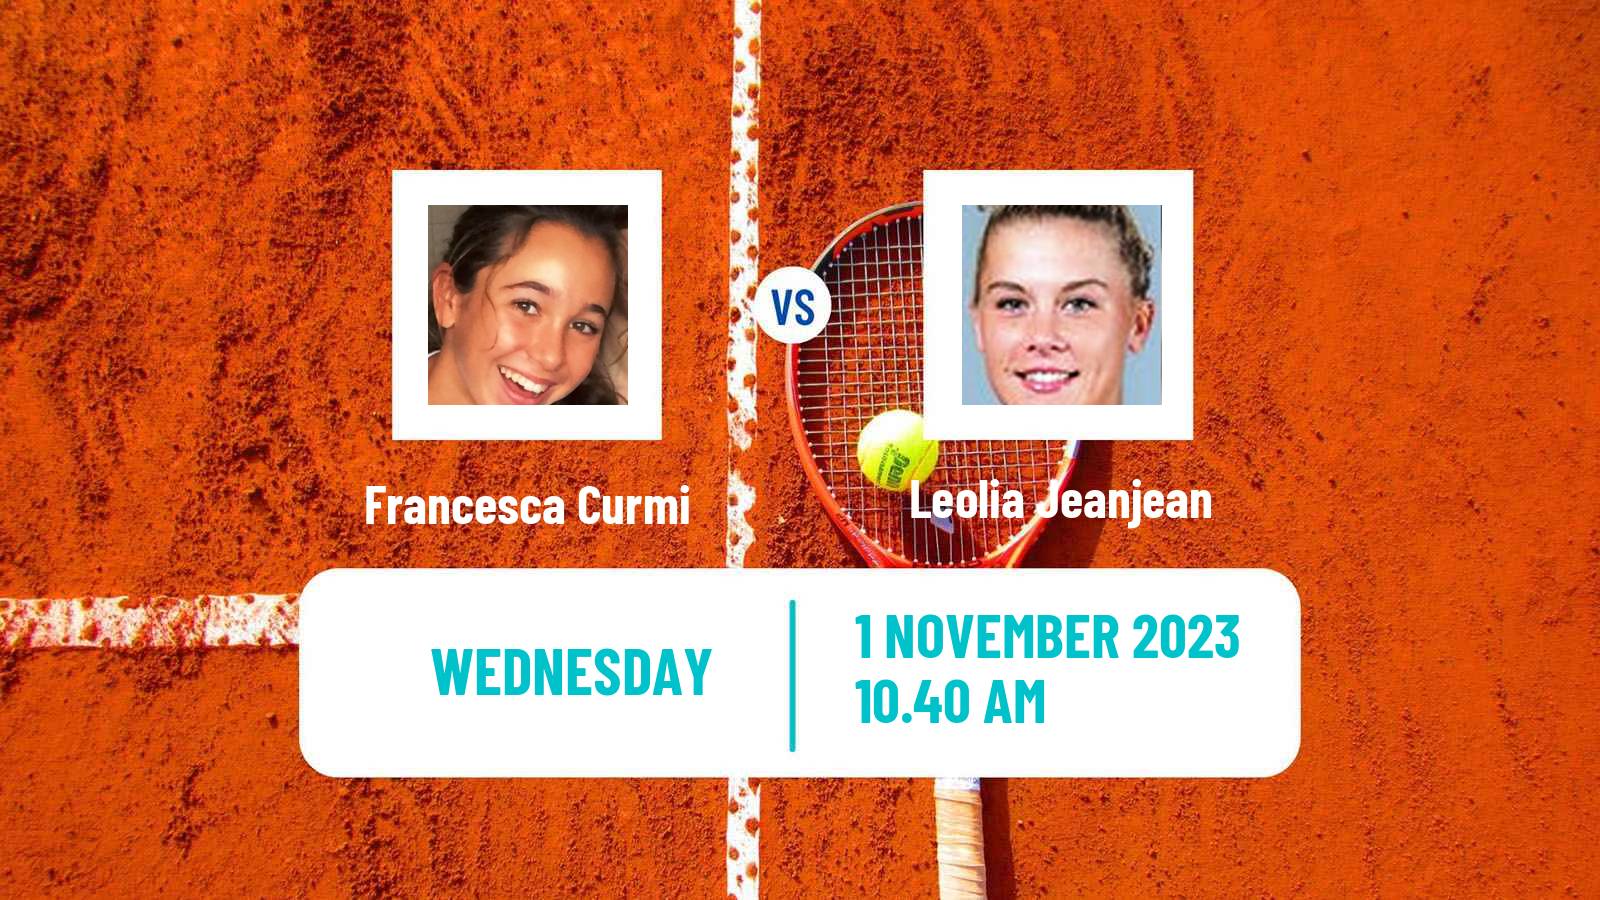 Tennis ITF W60 Nantes Women Francesca Curmi - Leolia Jeanjean